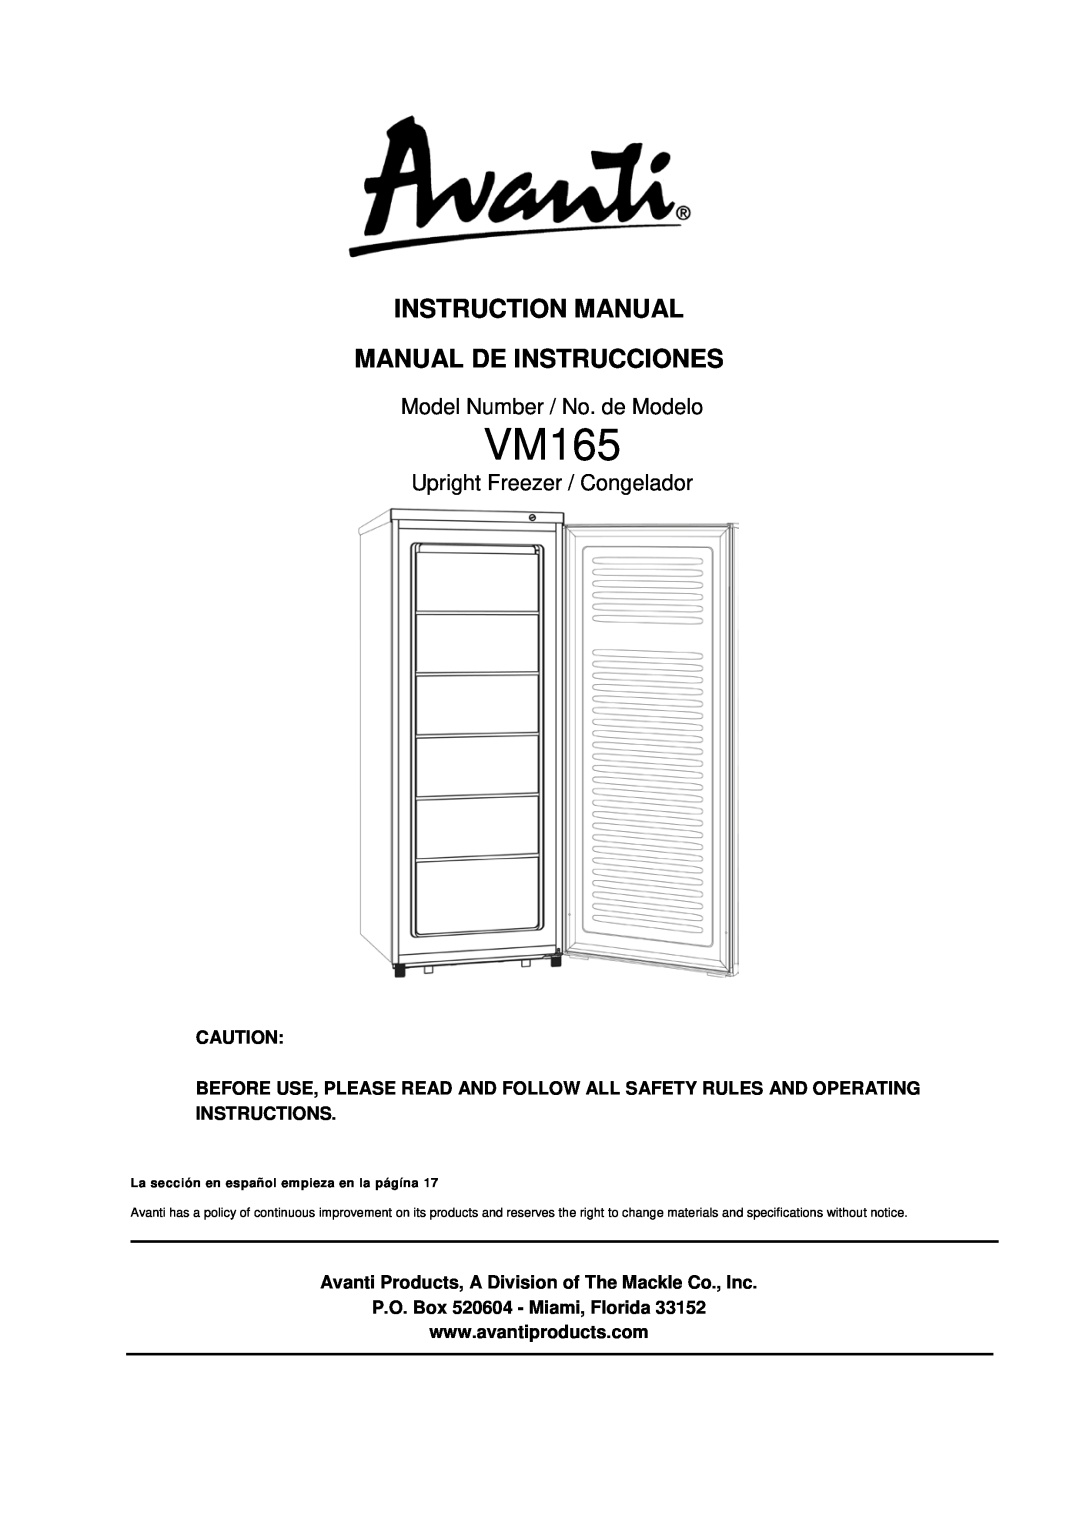 Avanti VM165 instruction manual Model Number / No. de Modelo, Upright Freezer / Congelador 